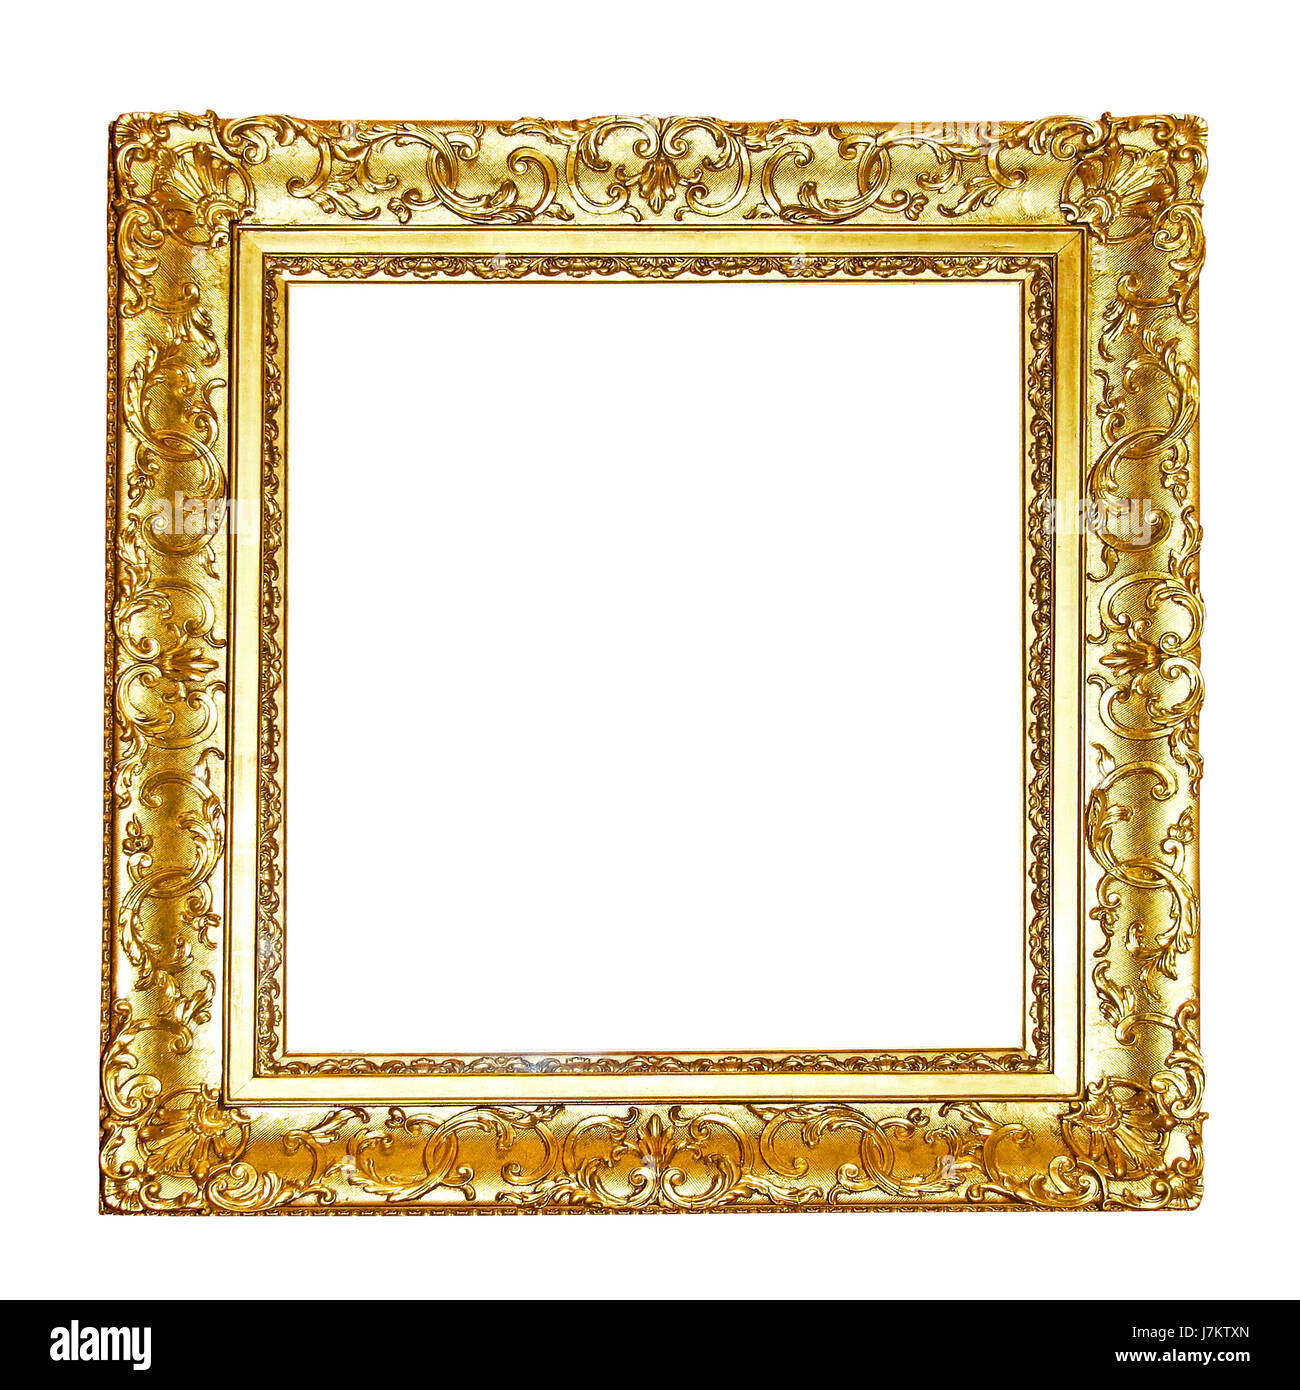 art isolated golden frame gold framework border art isolated antique  vintage Stock Photo - Alamy